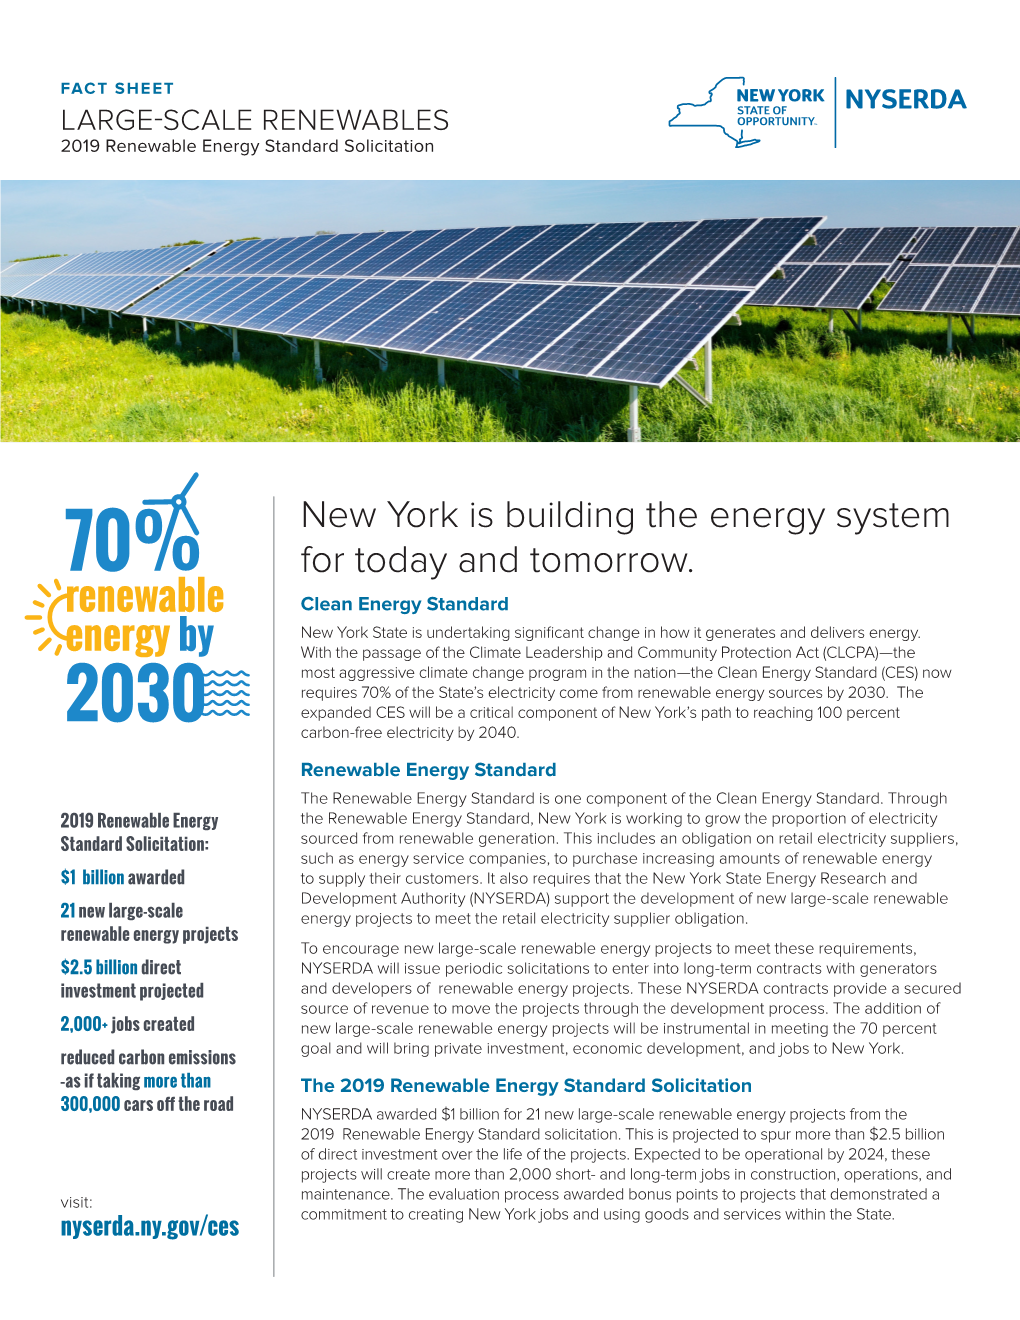 2018 Renewable Energy Standard Solicitation Fact Sheet [PDF]